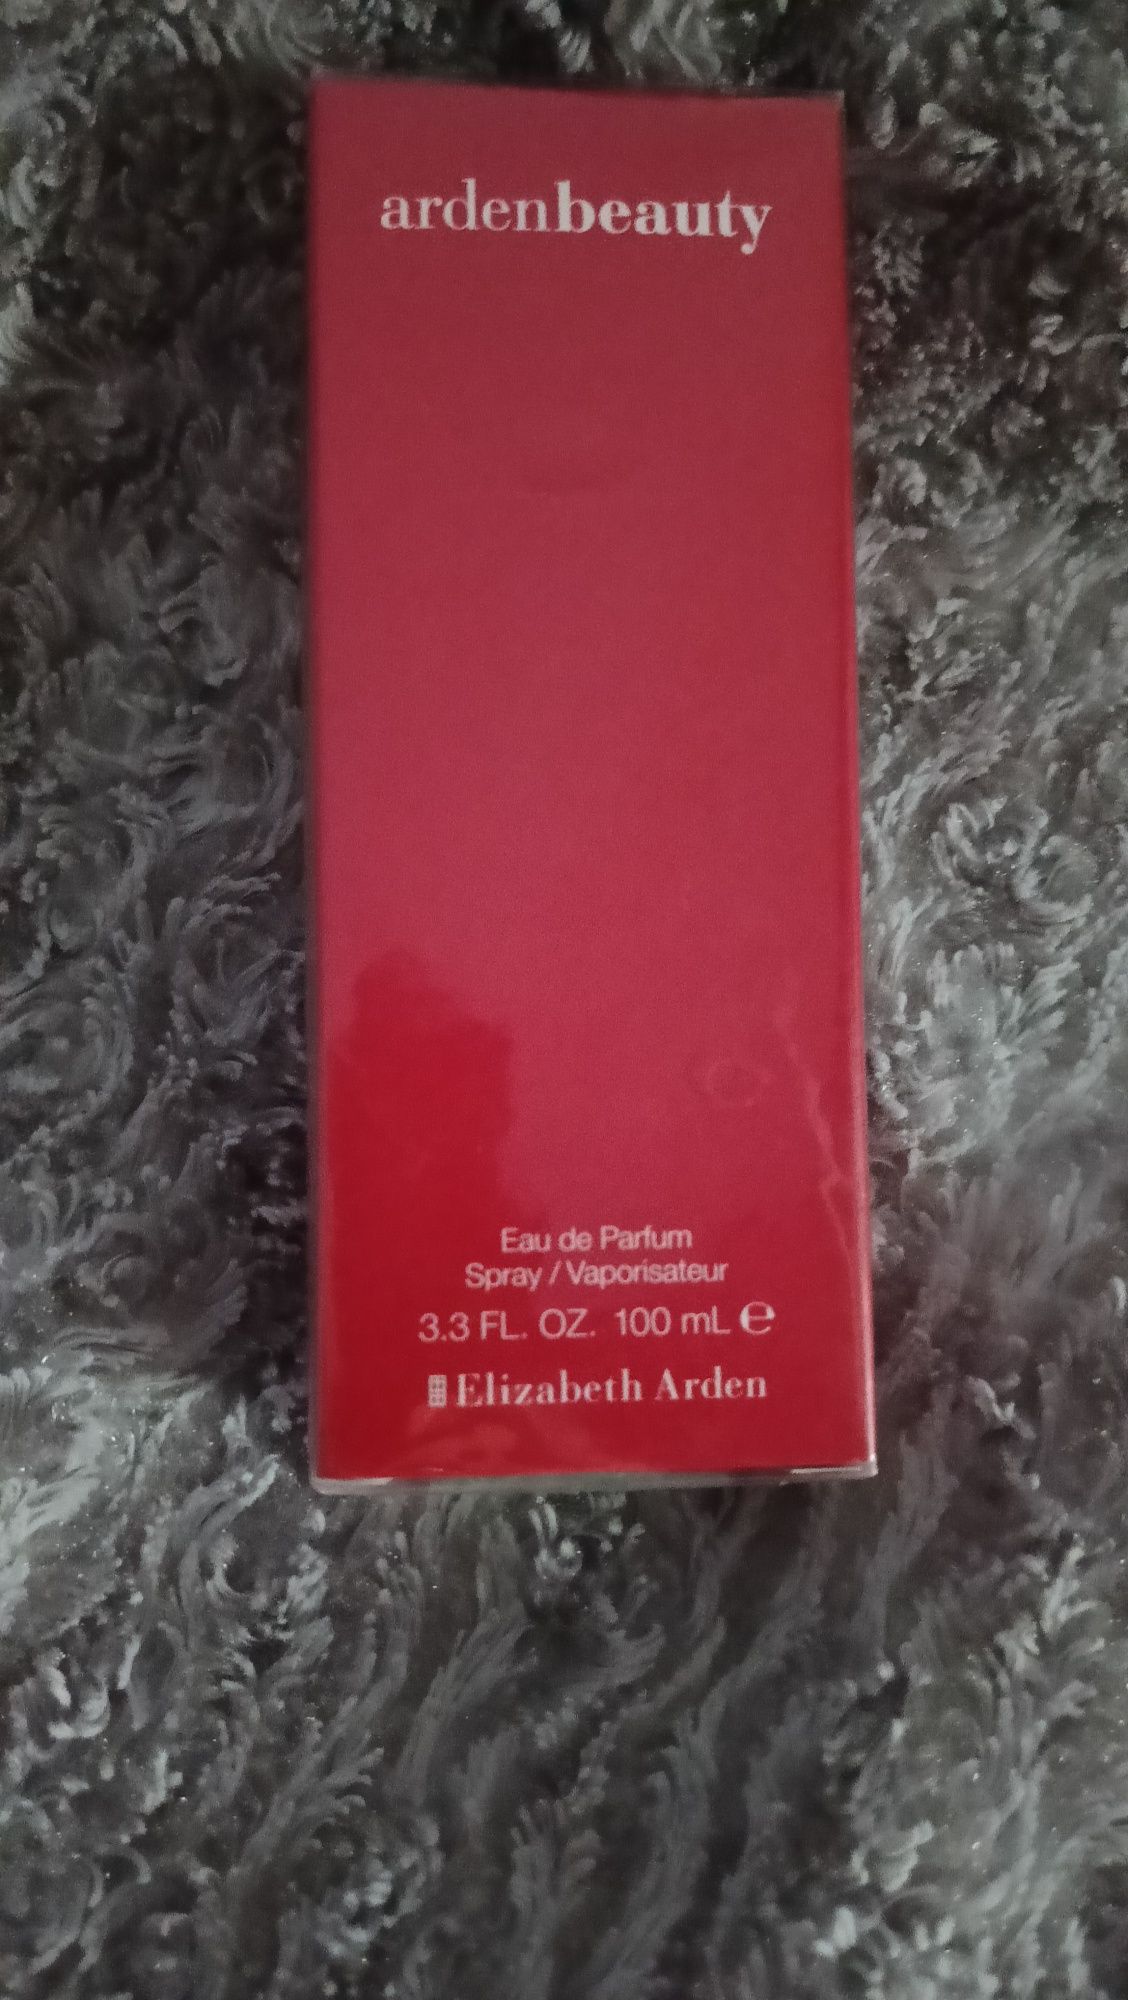 Perfumy Elizabeth Arden ardenbeauty 100 ml